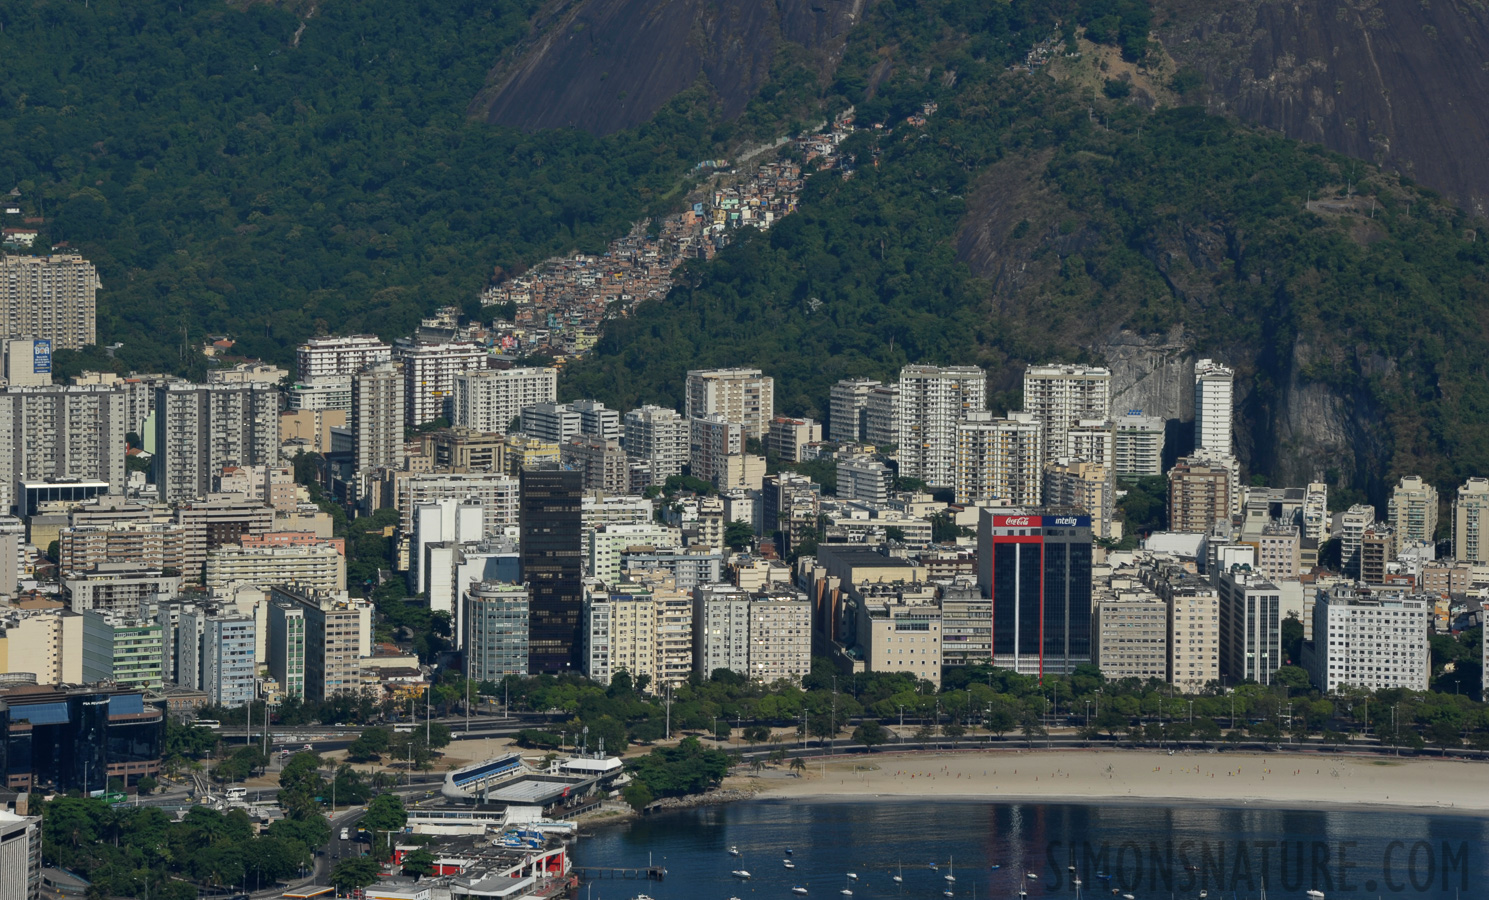 Rio de Janeiro [170 mm, 1/250 Sek. bei f / 13, ISO 200]